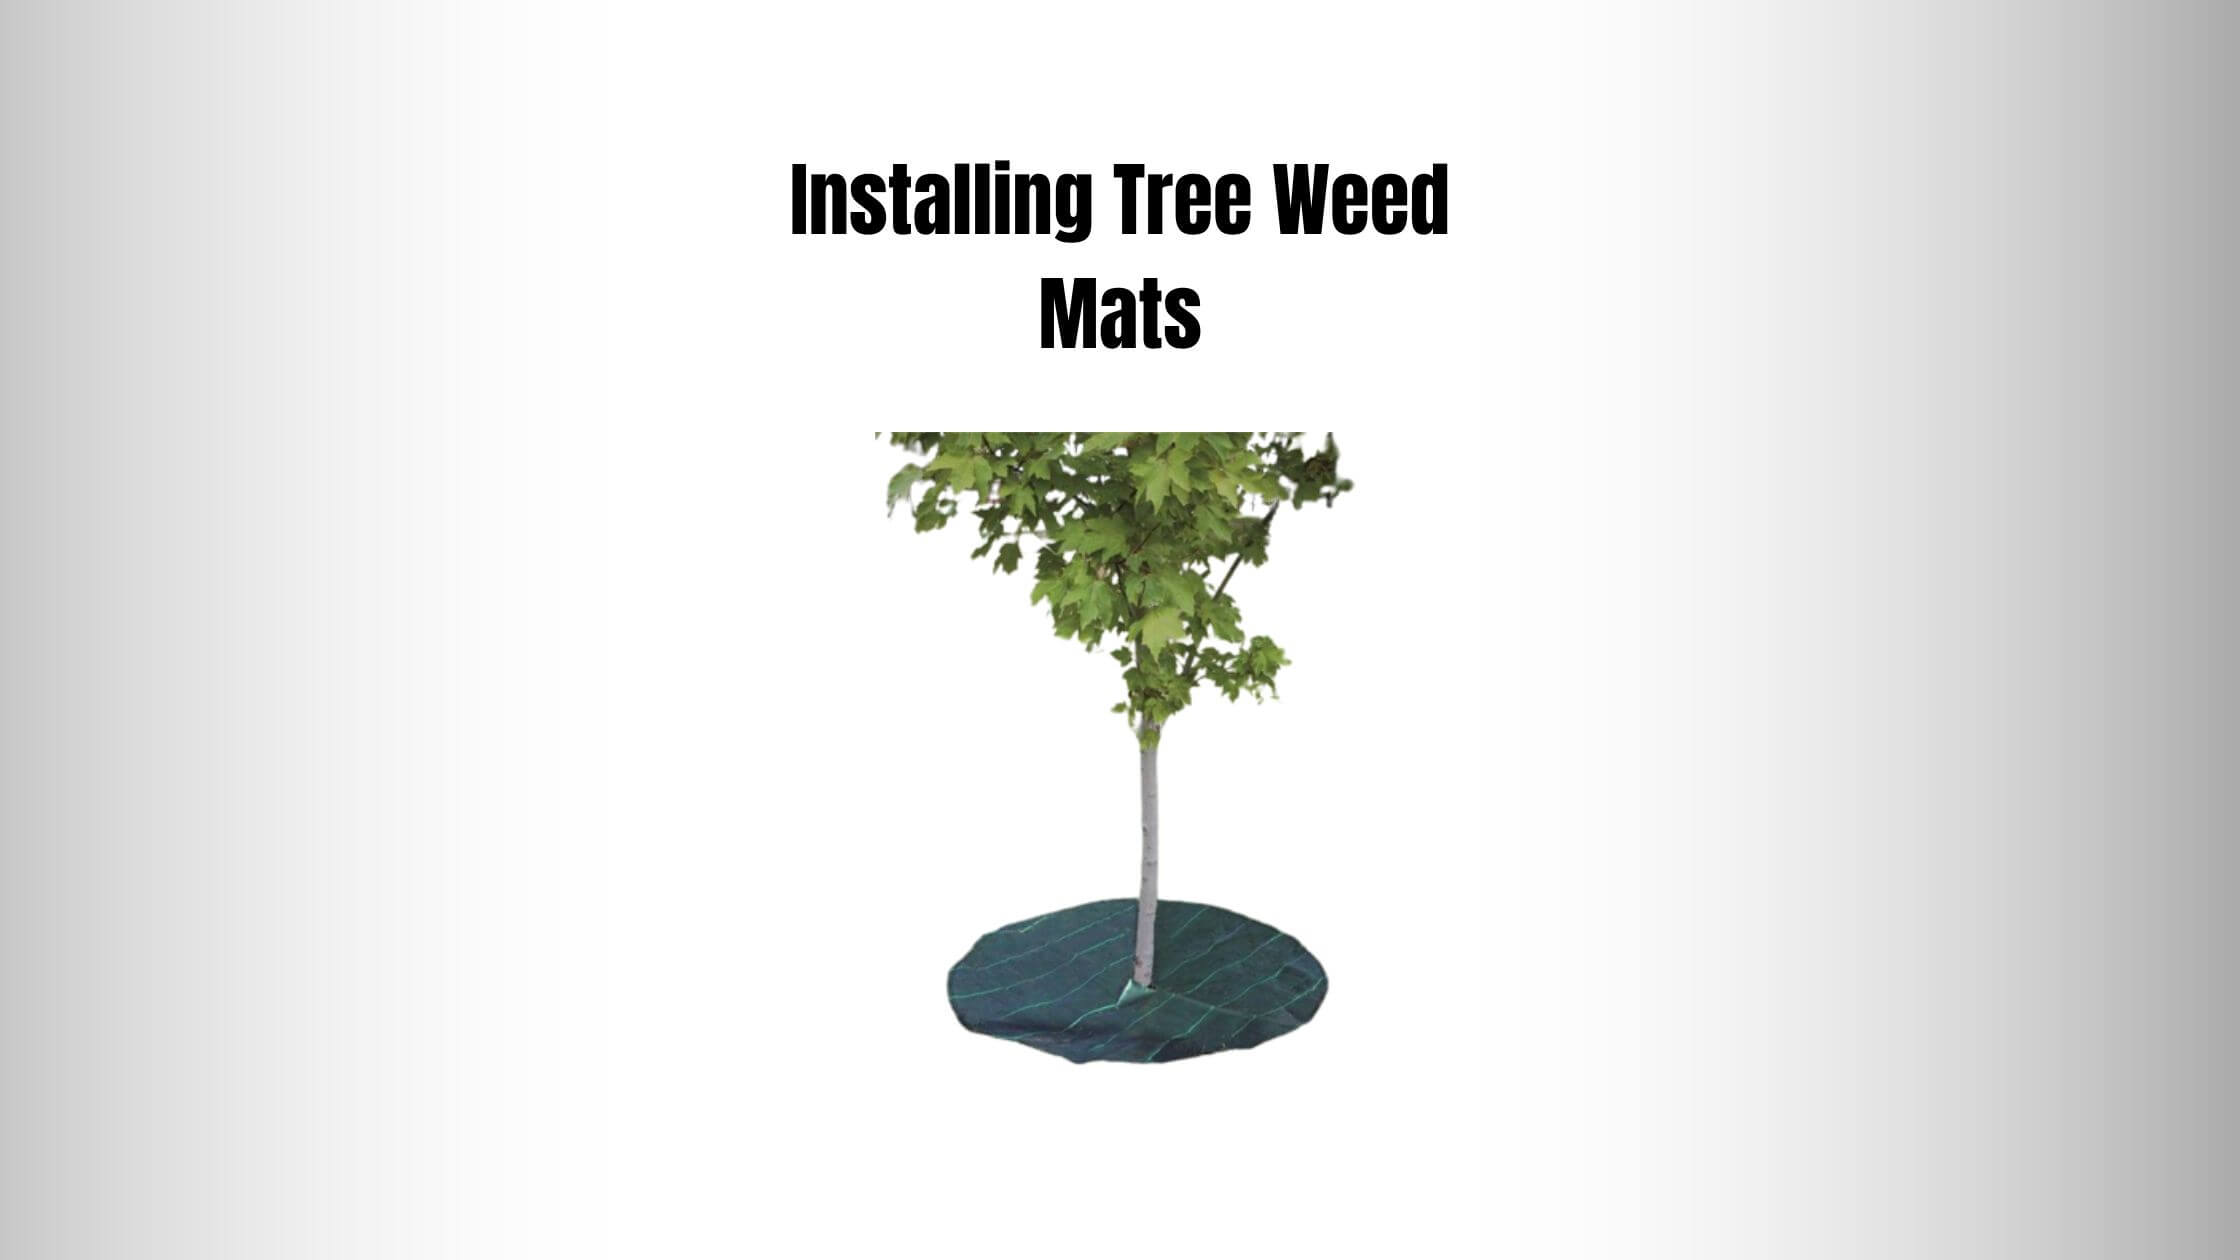 Installing Tree Weed Mats